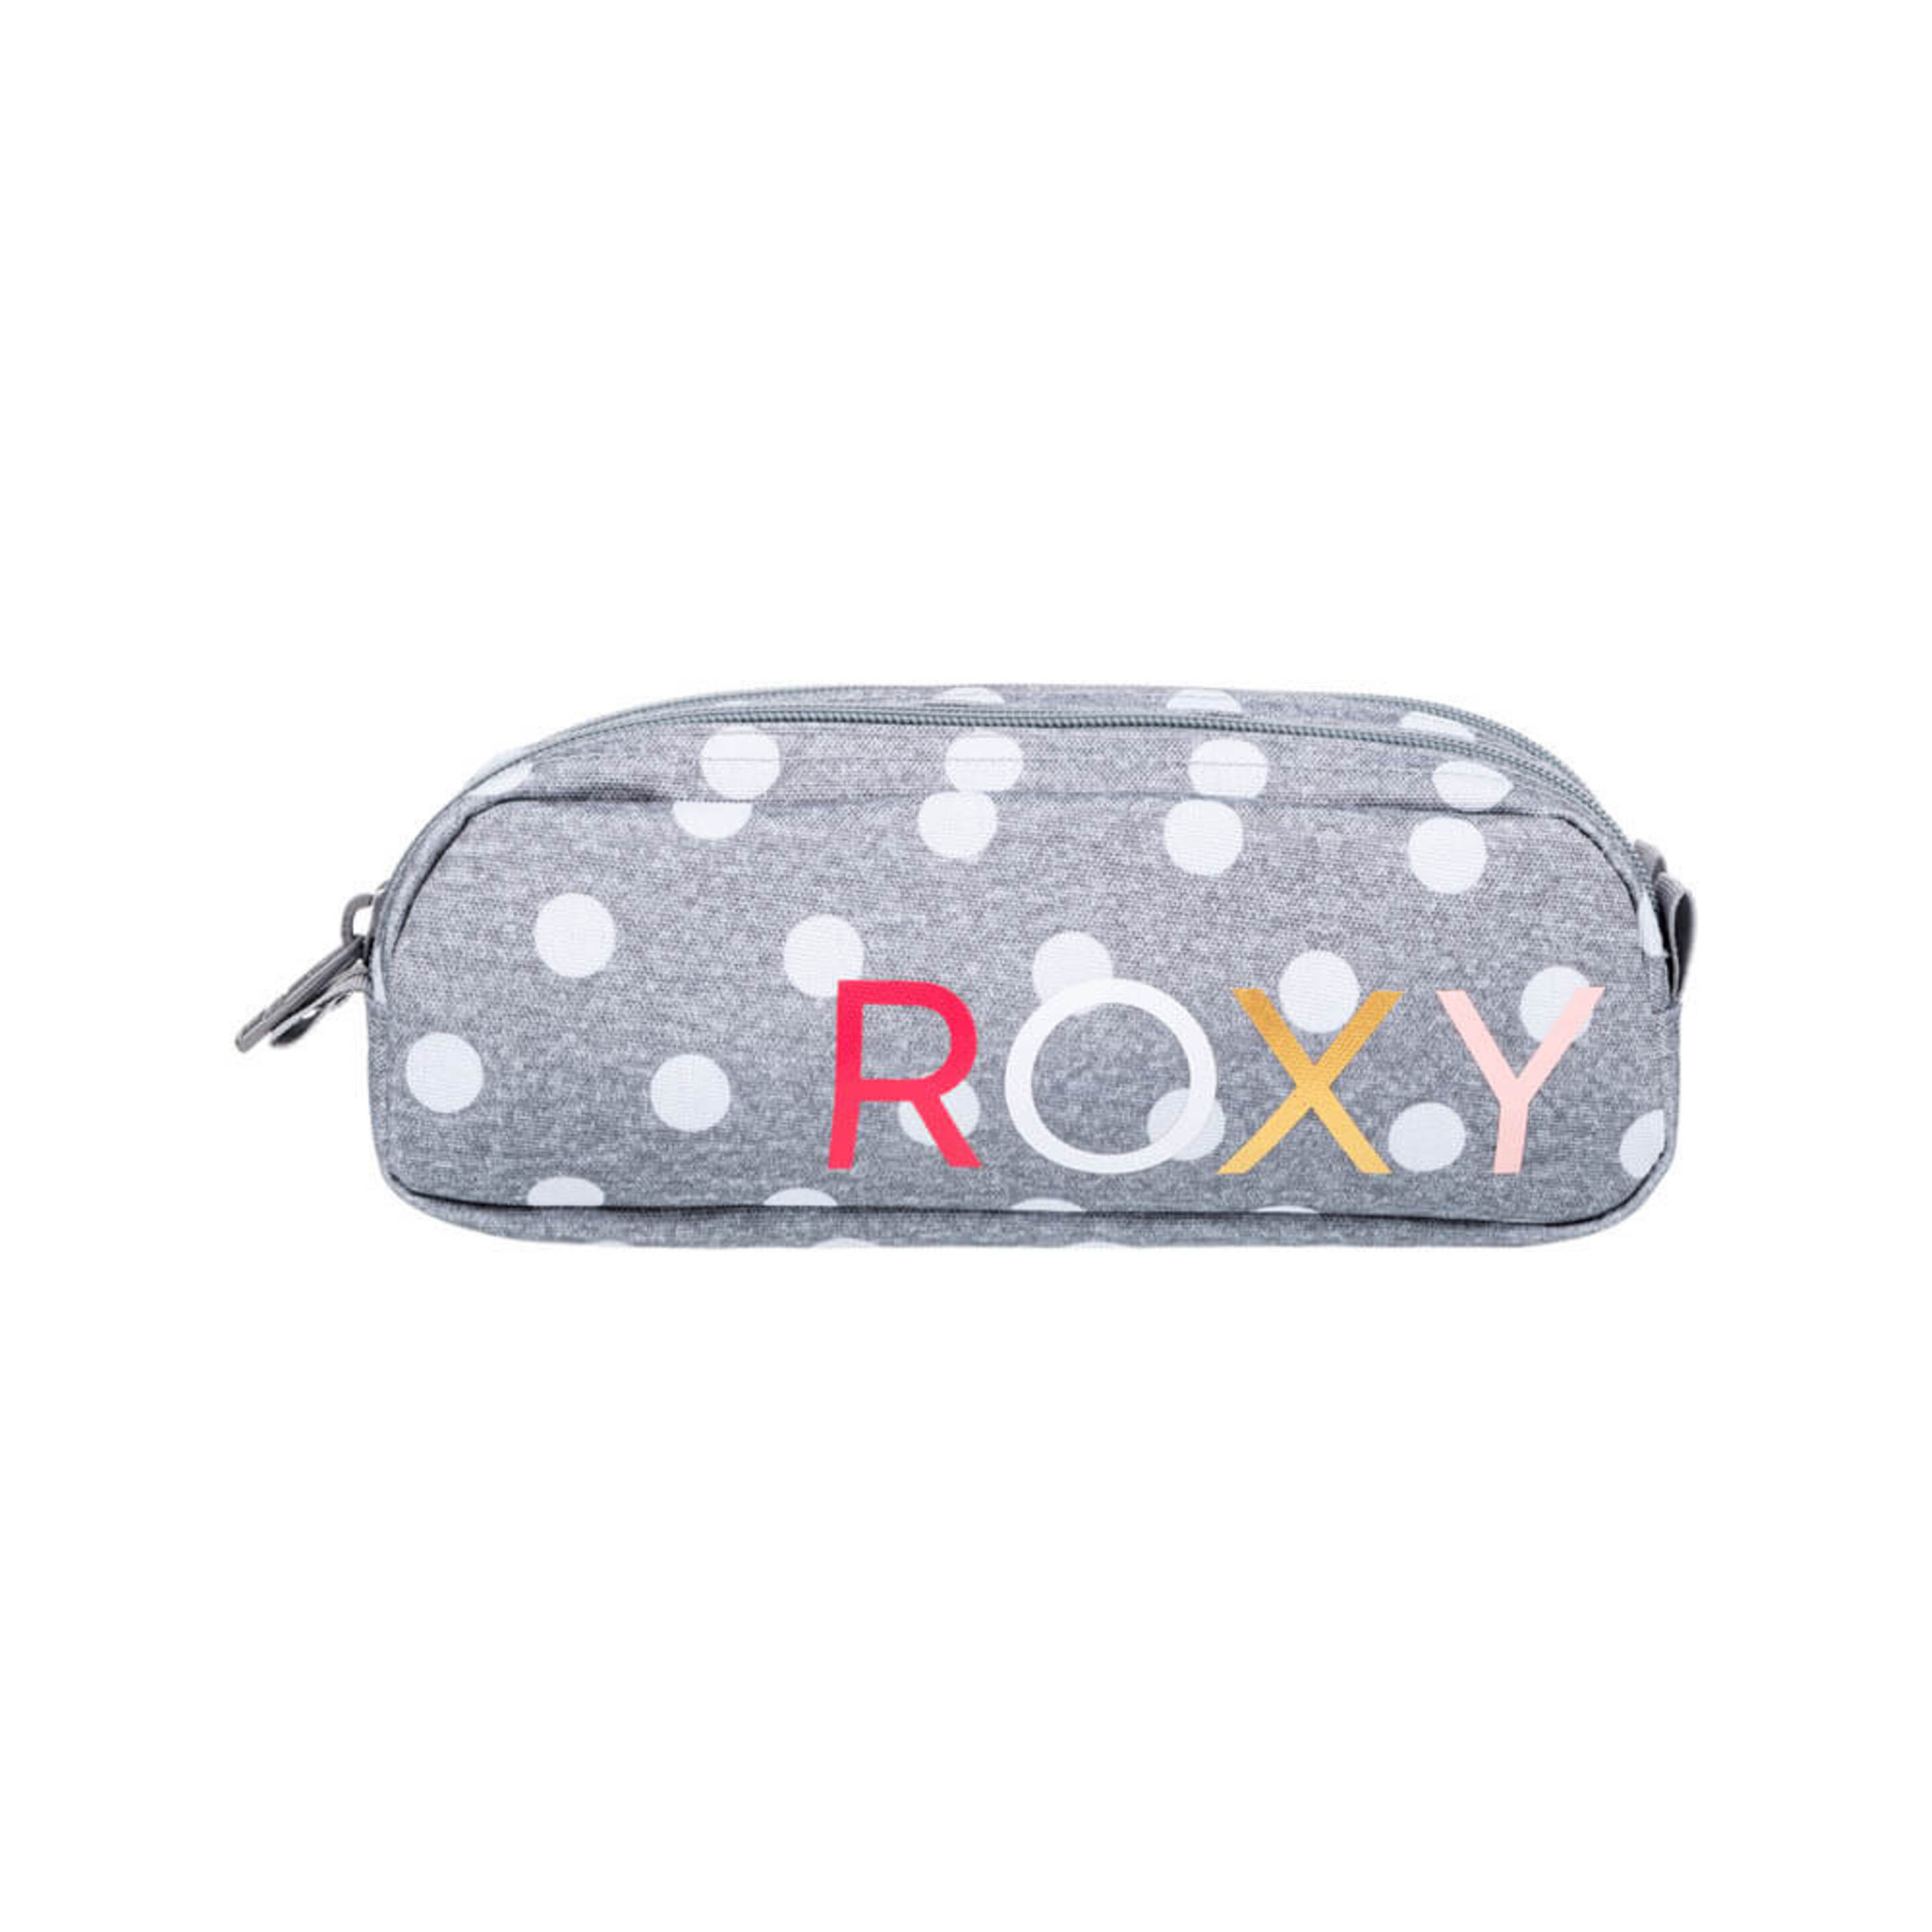 Roxy Travel Accessory- Money Belt, Gray